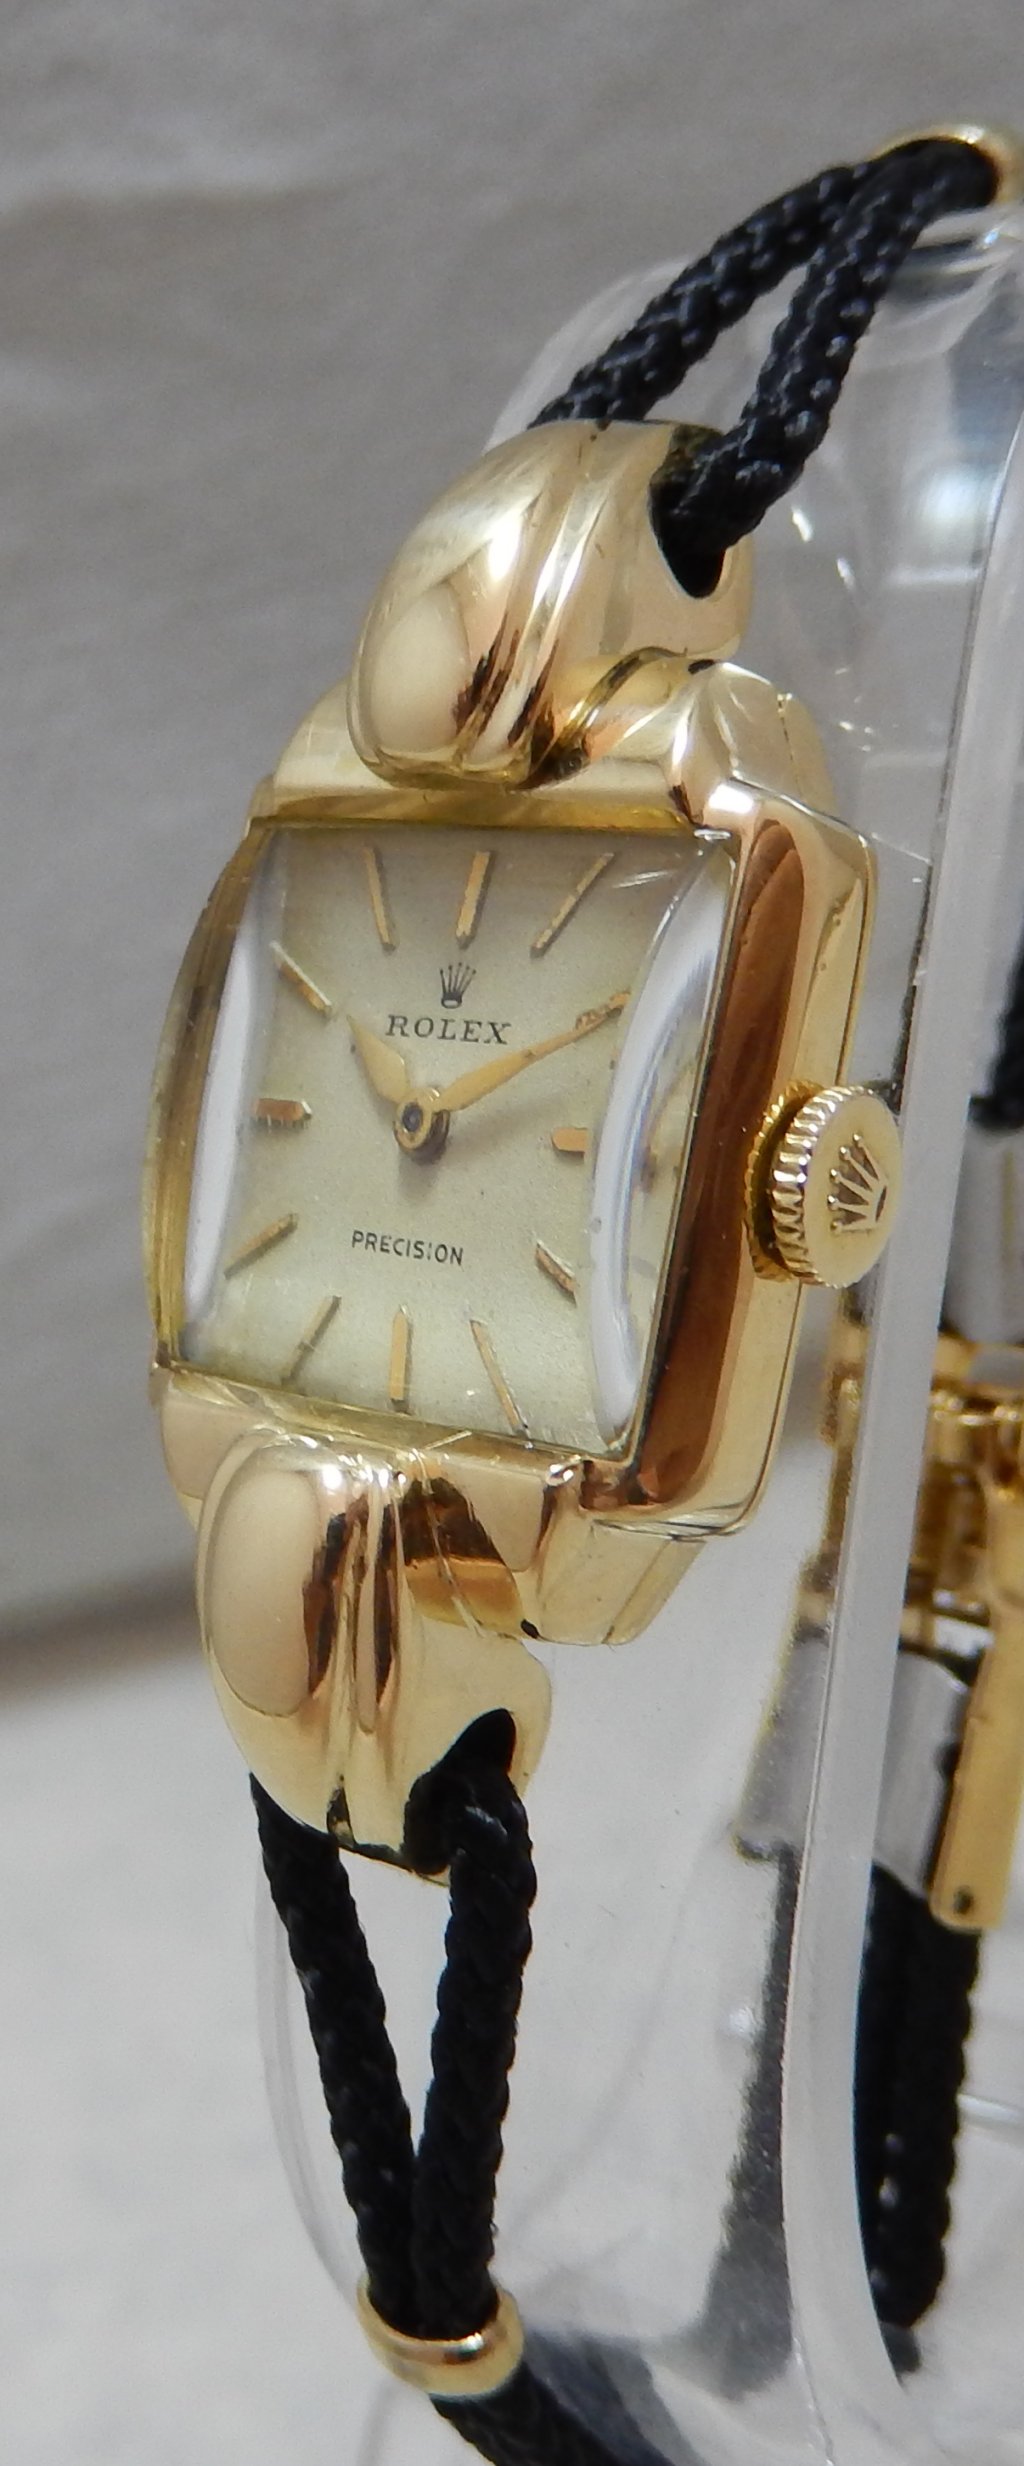 rolex precision gold watch